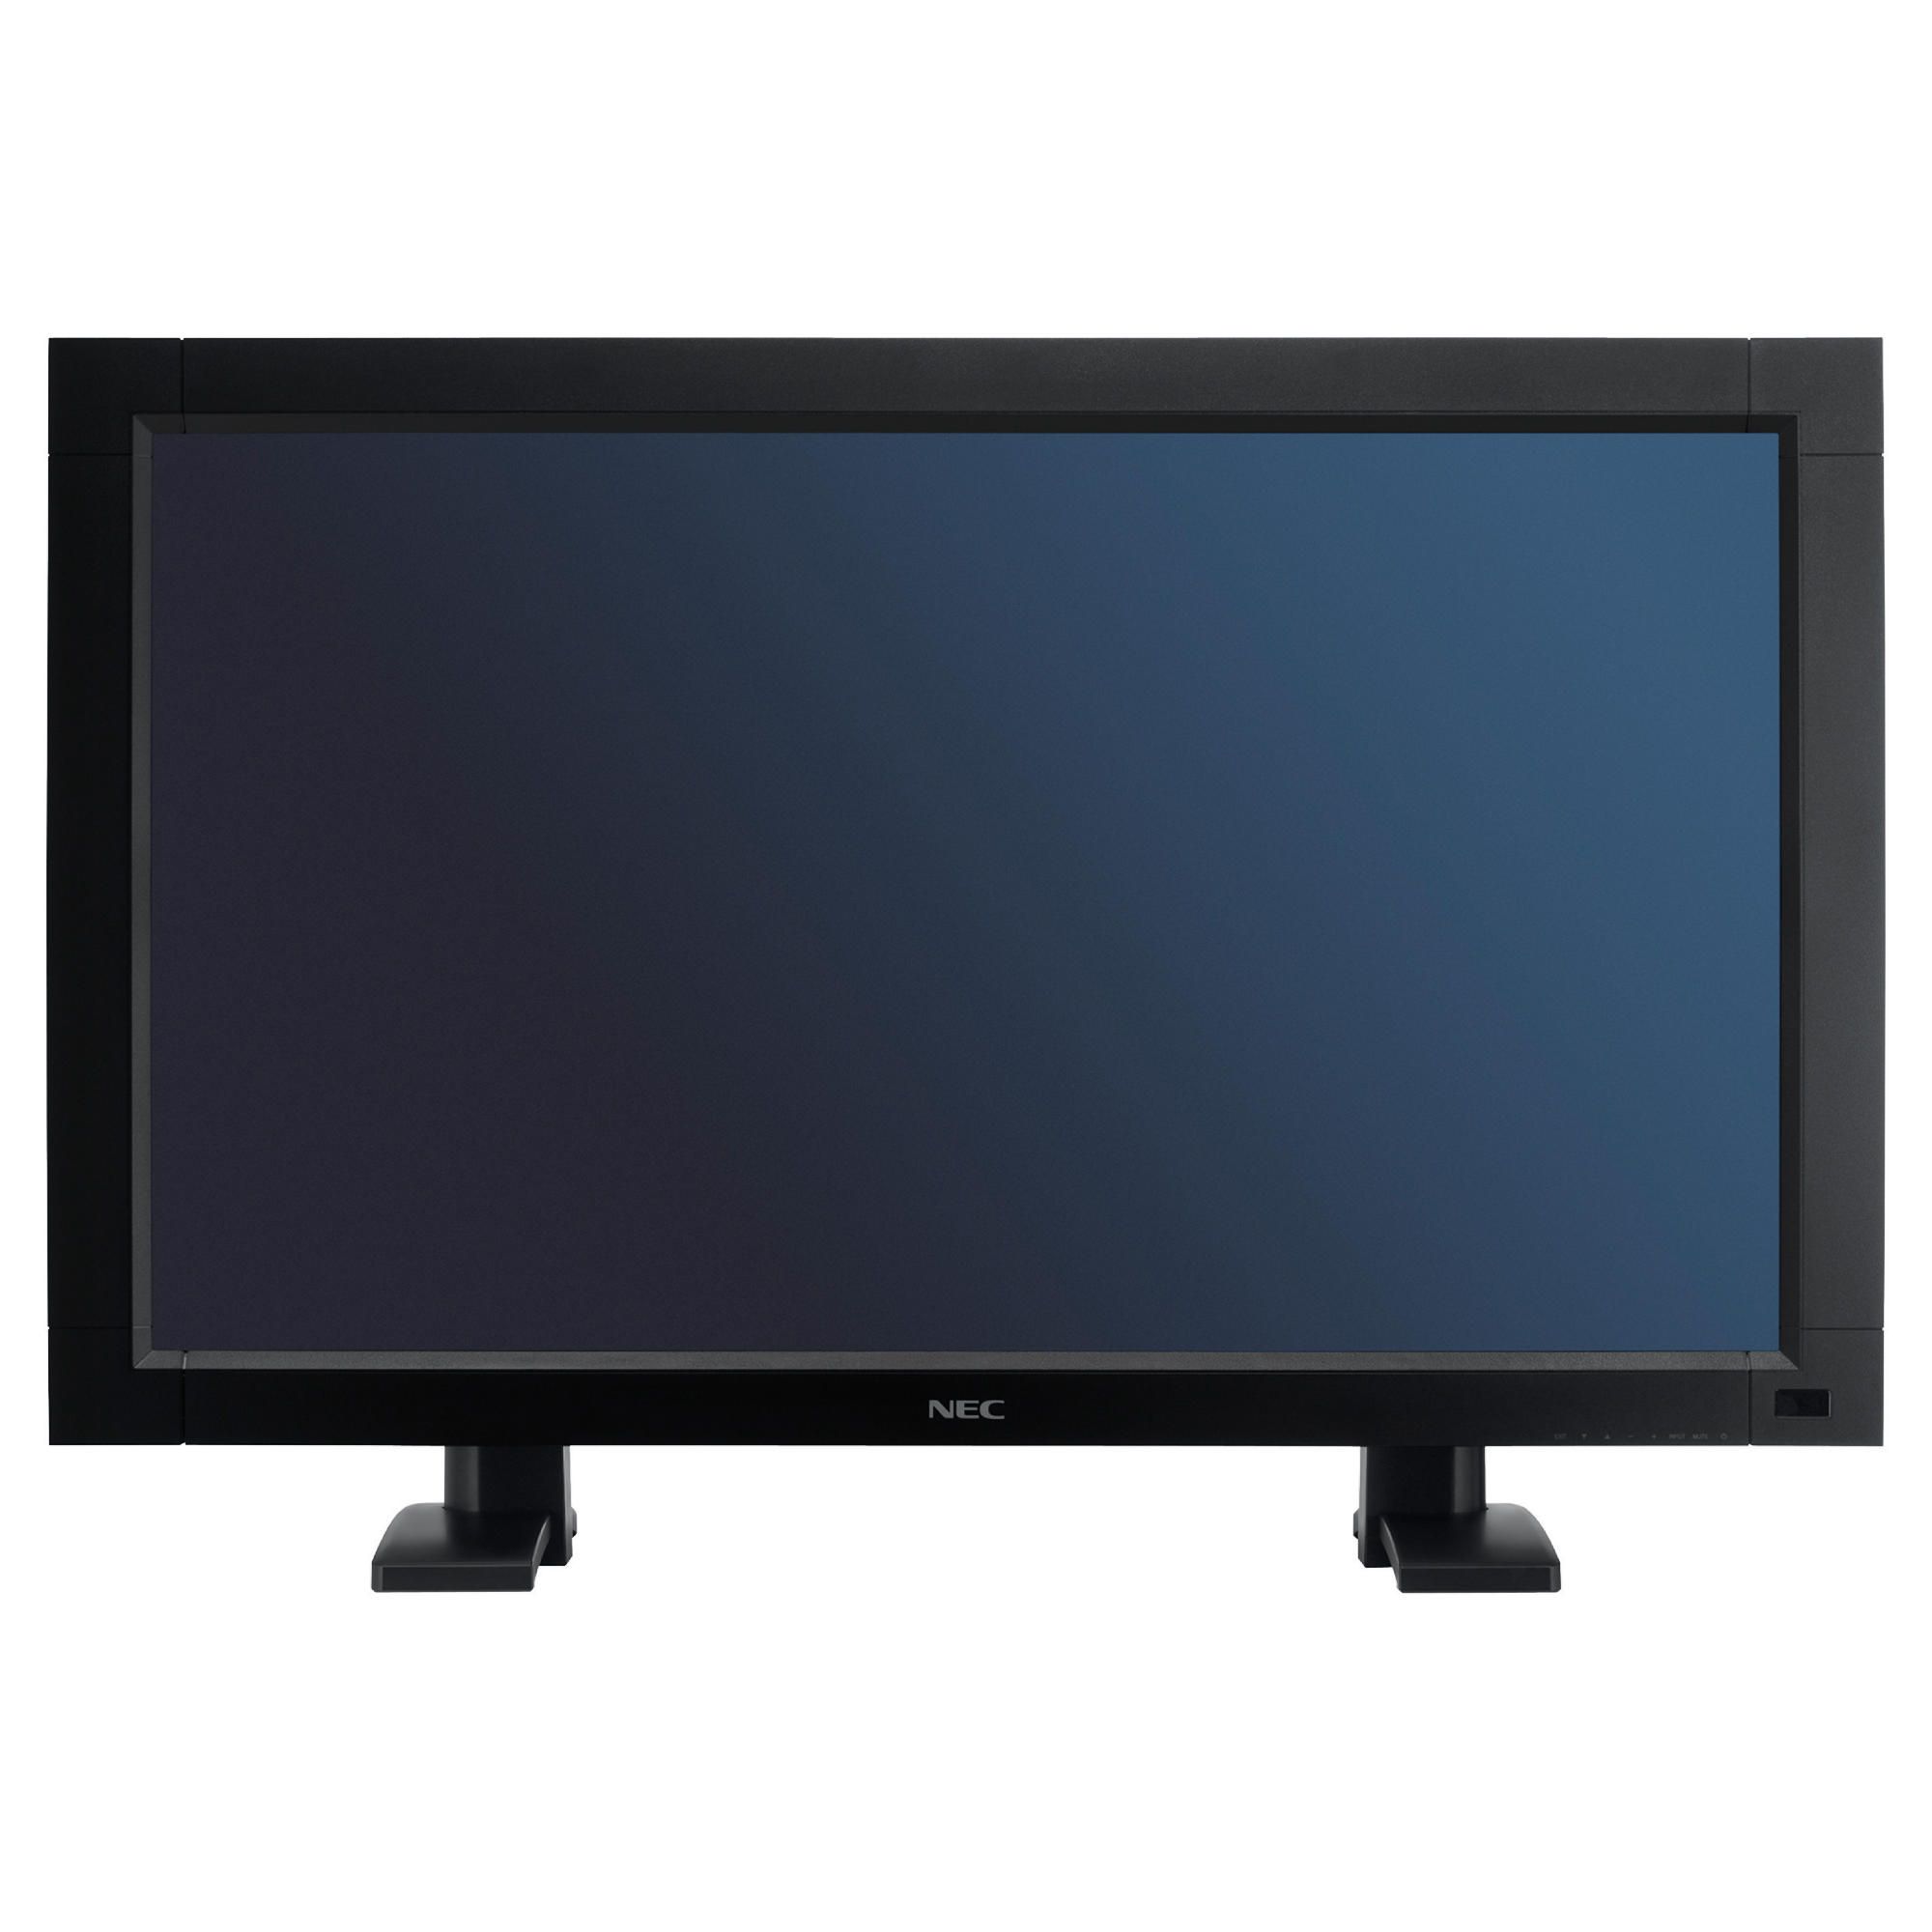 NEC V321 32'' (81.3 cm) LCD Monitor Black at Tesco Direct